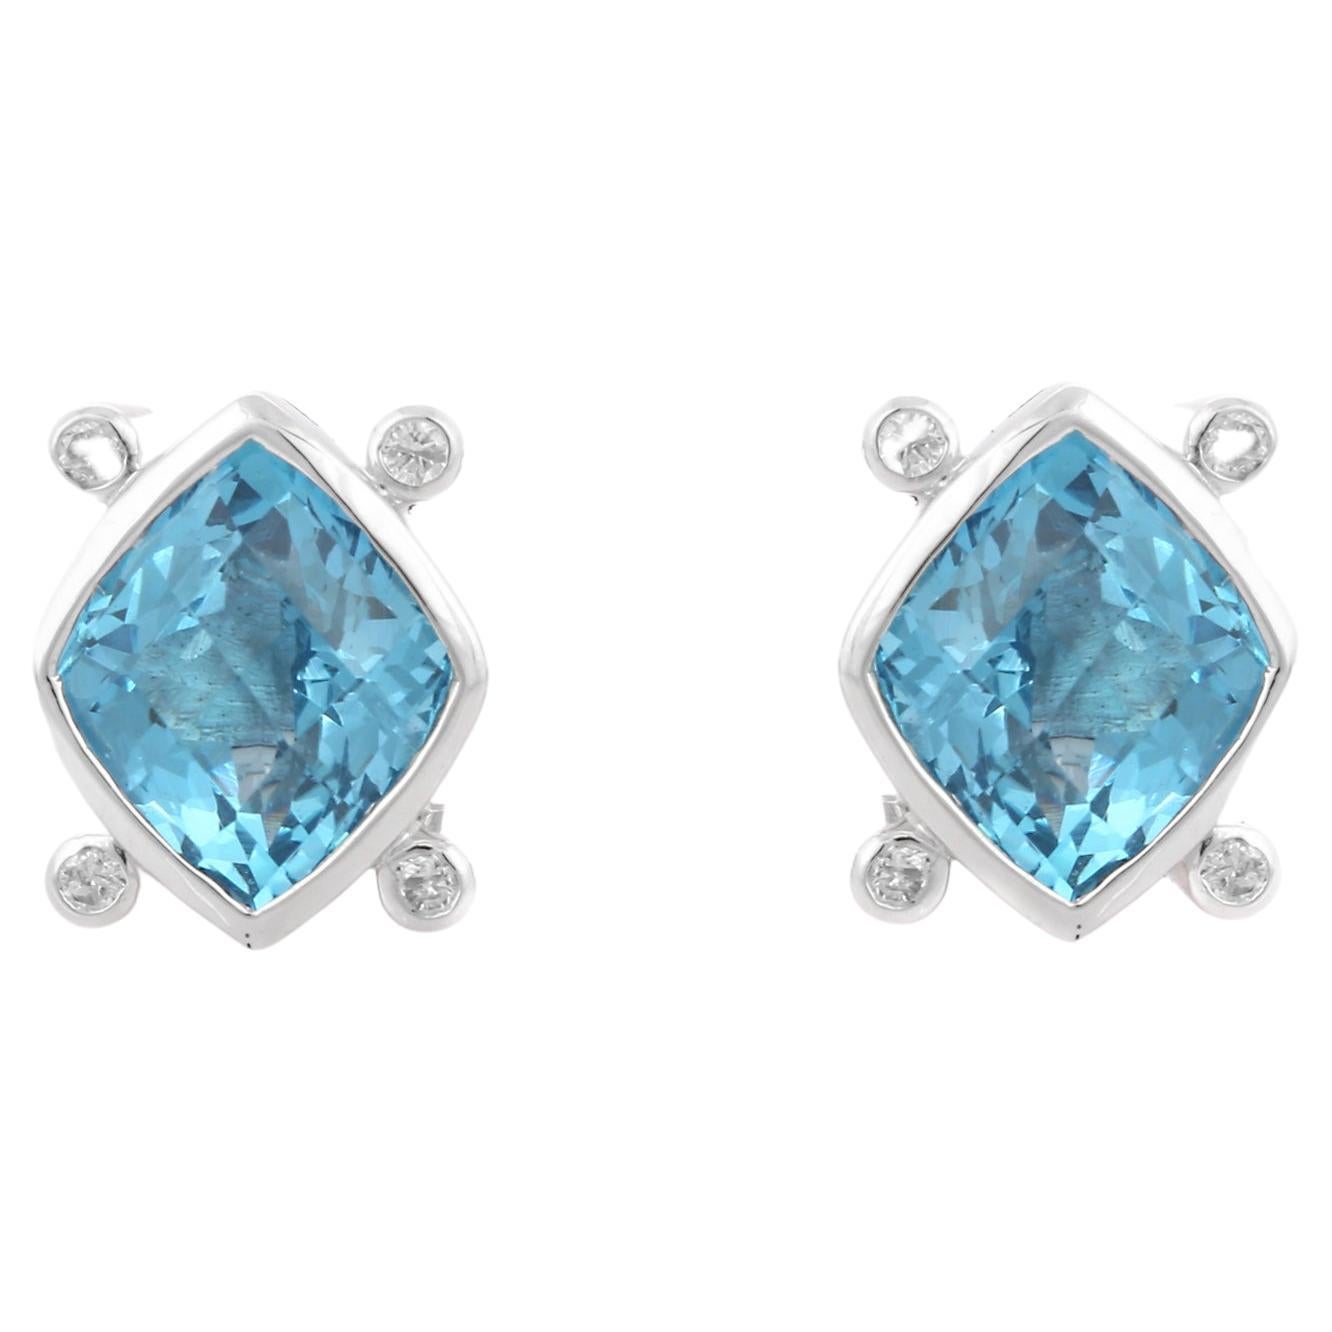 5Ct Natural Blue Topaz and Diamond 18K White Gold Stud Earrings